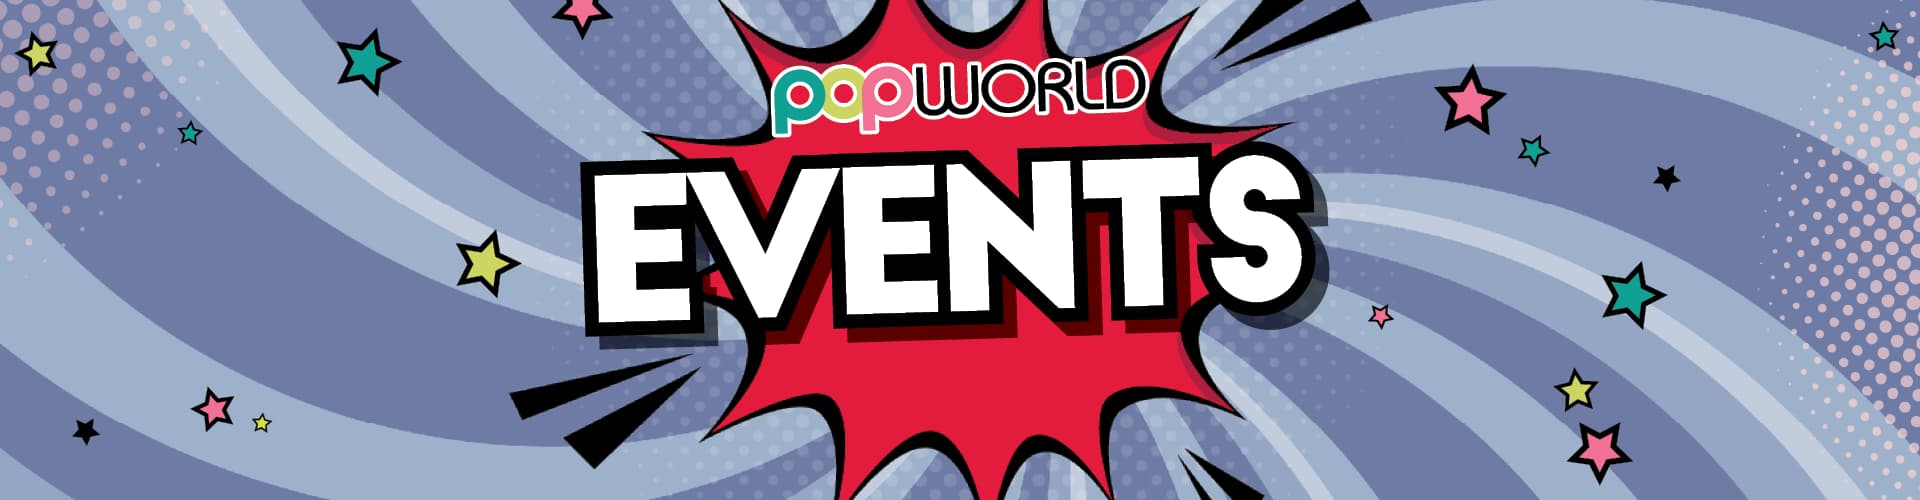 Events at Popworld Southampton